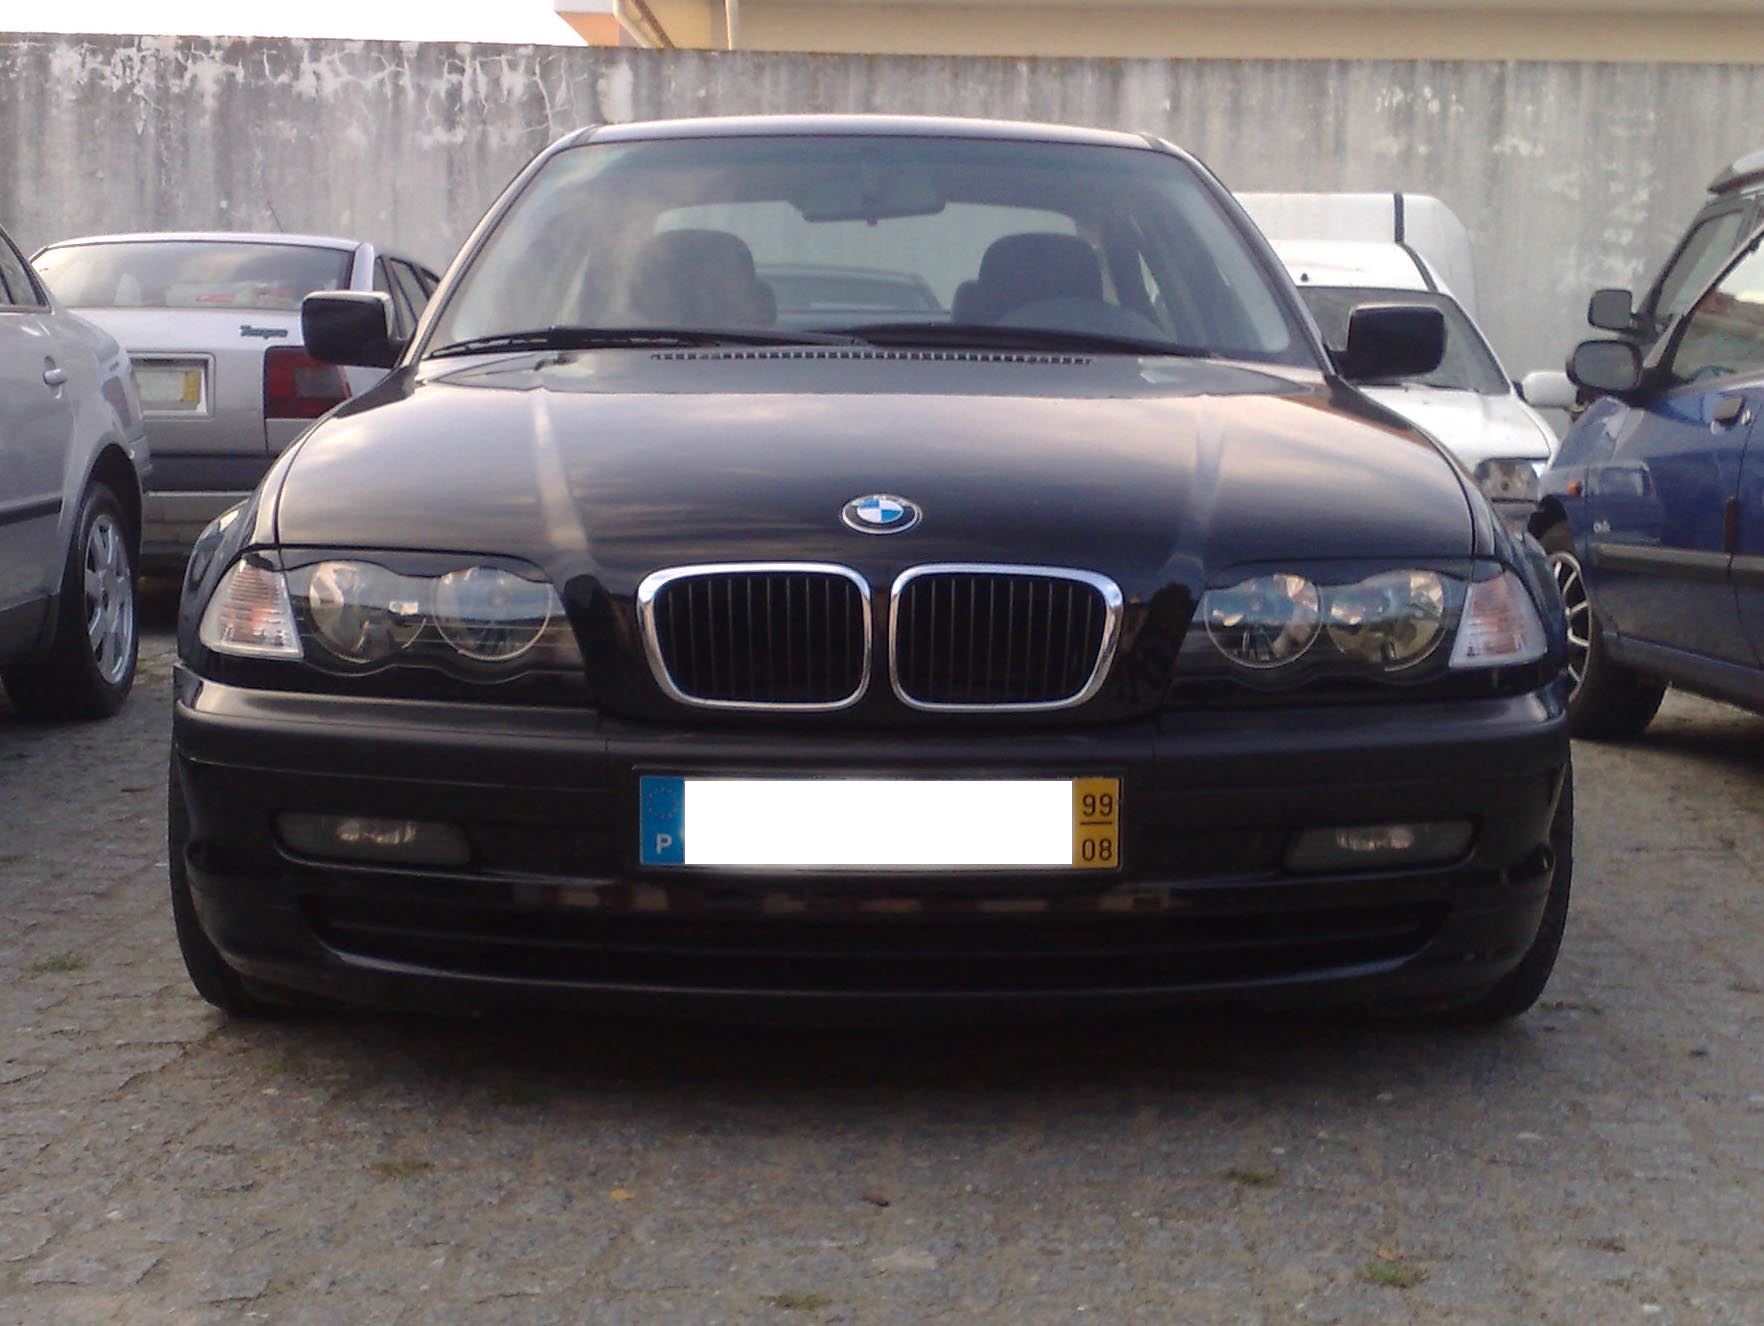 BMW 320d 1999 photo - 1